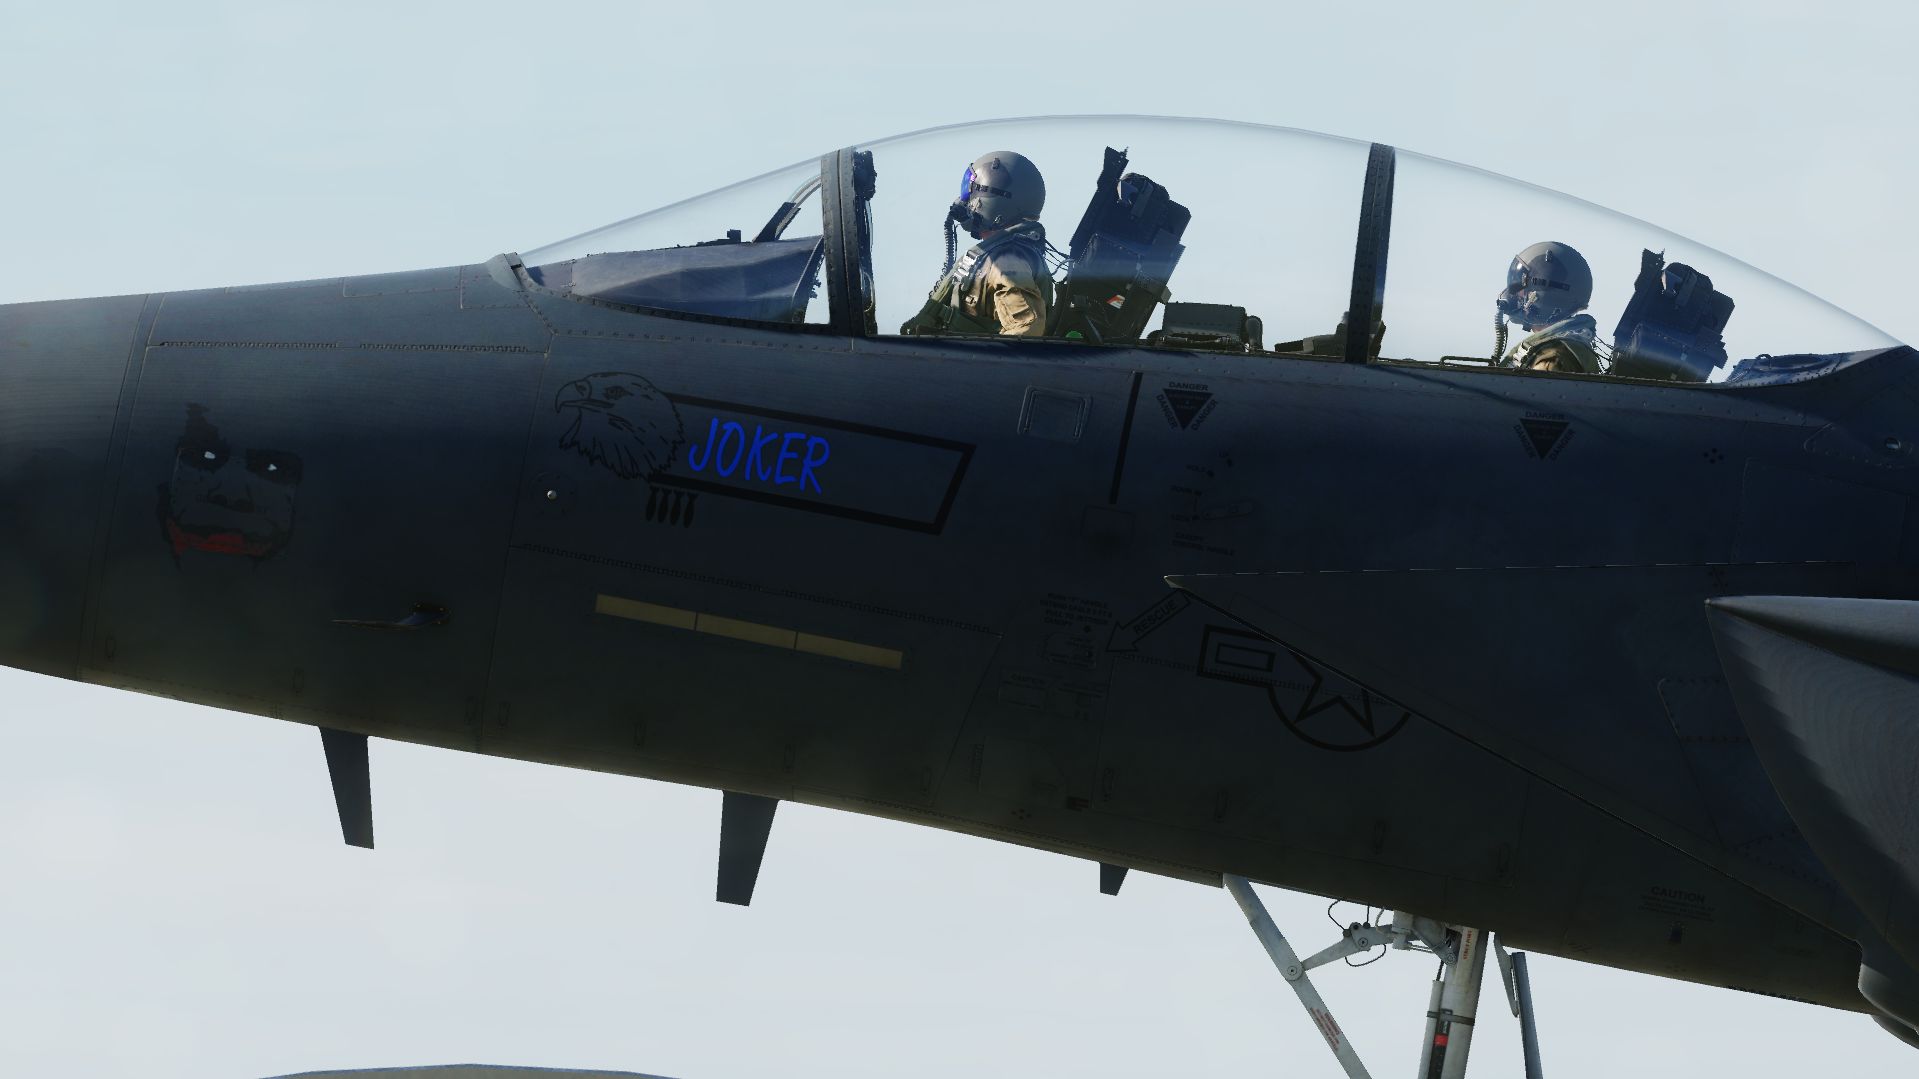 F-15E Strike eagle LN 91-307 "Joker"